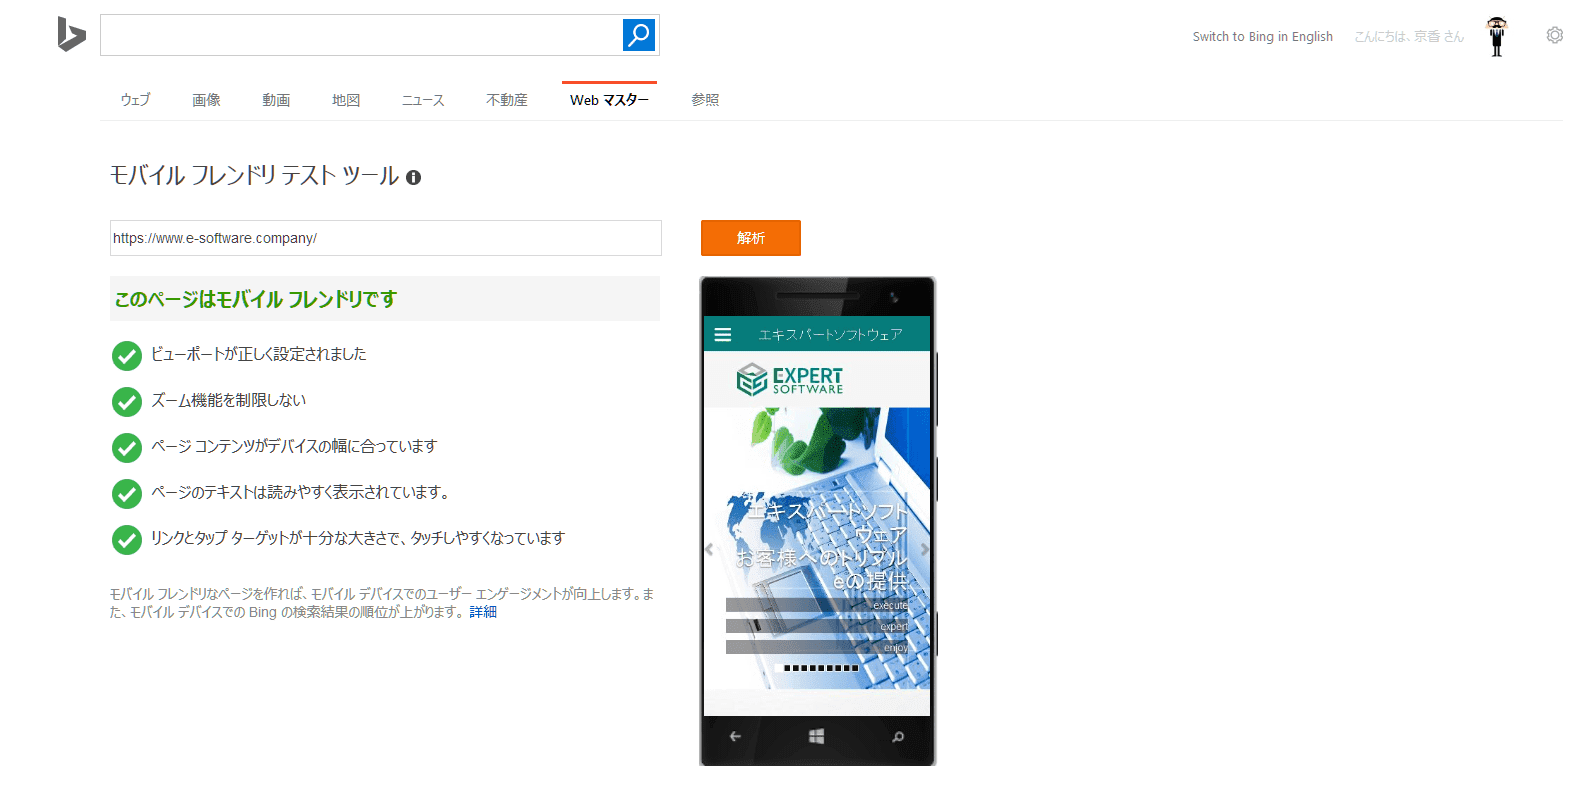 Bing - モバイル フレンドリ テスト ツール [サンプル画面]